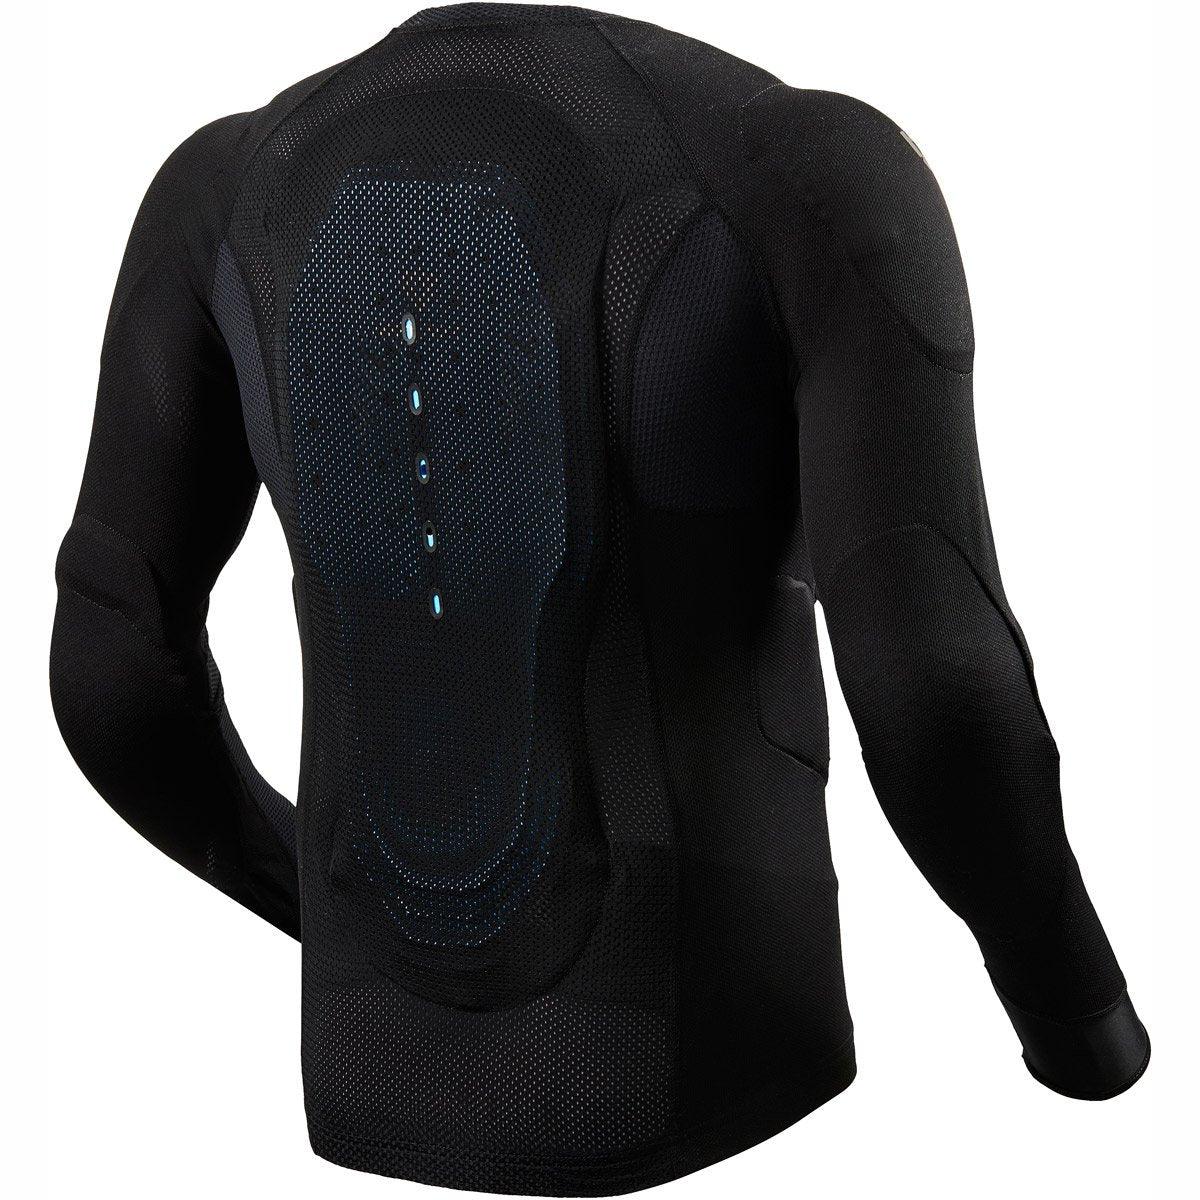 Rev It Proteus Protector Jacket Black - Armour Under Clothes